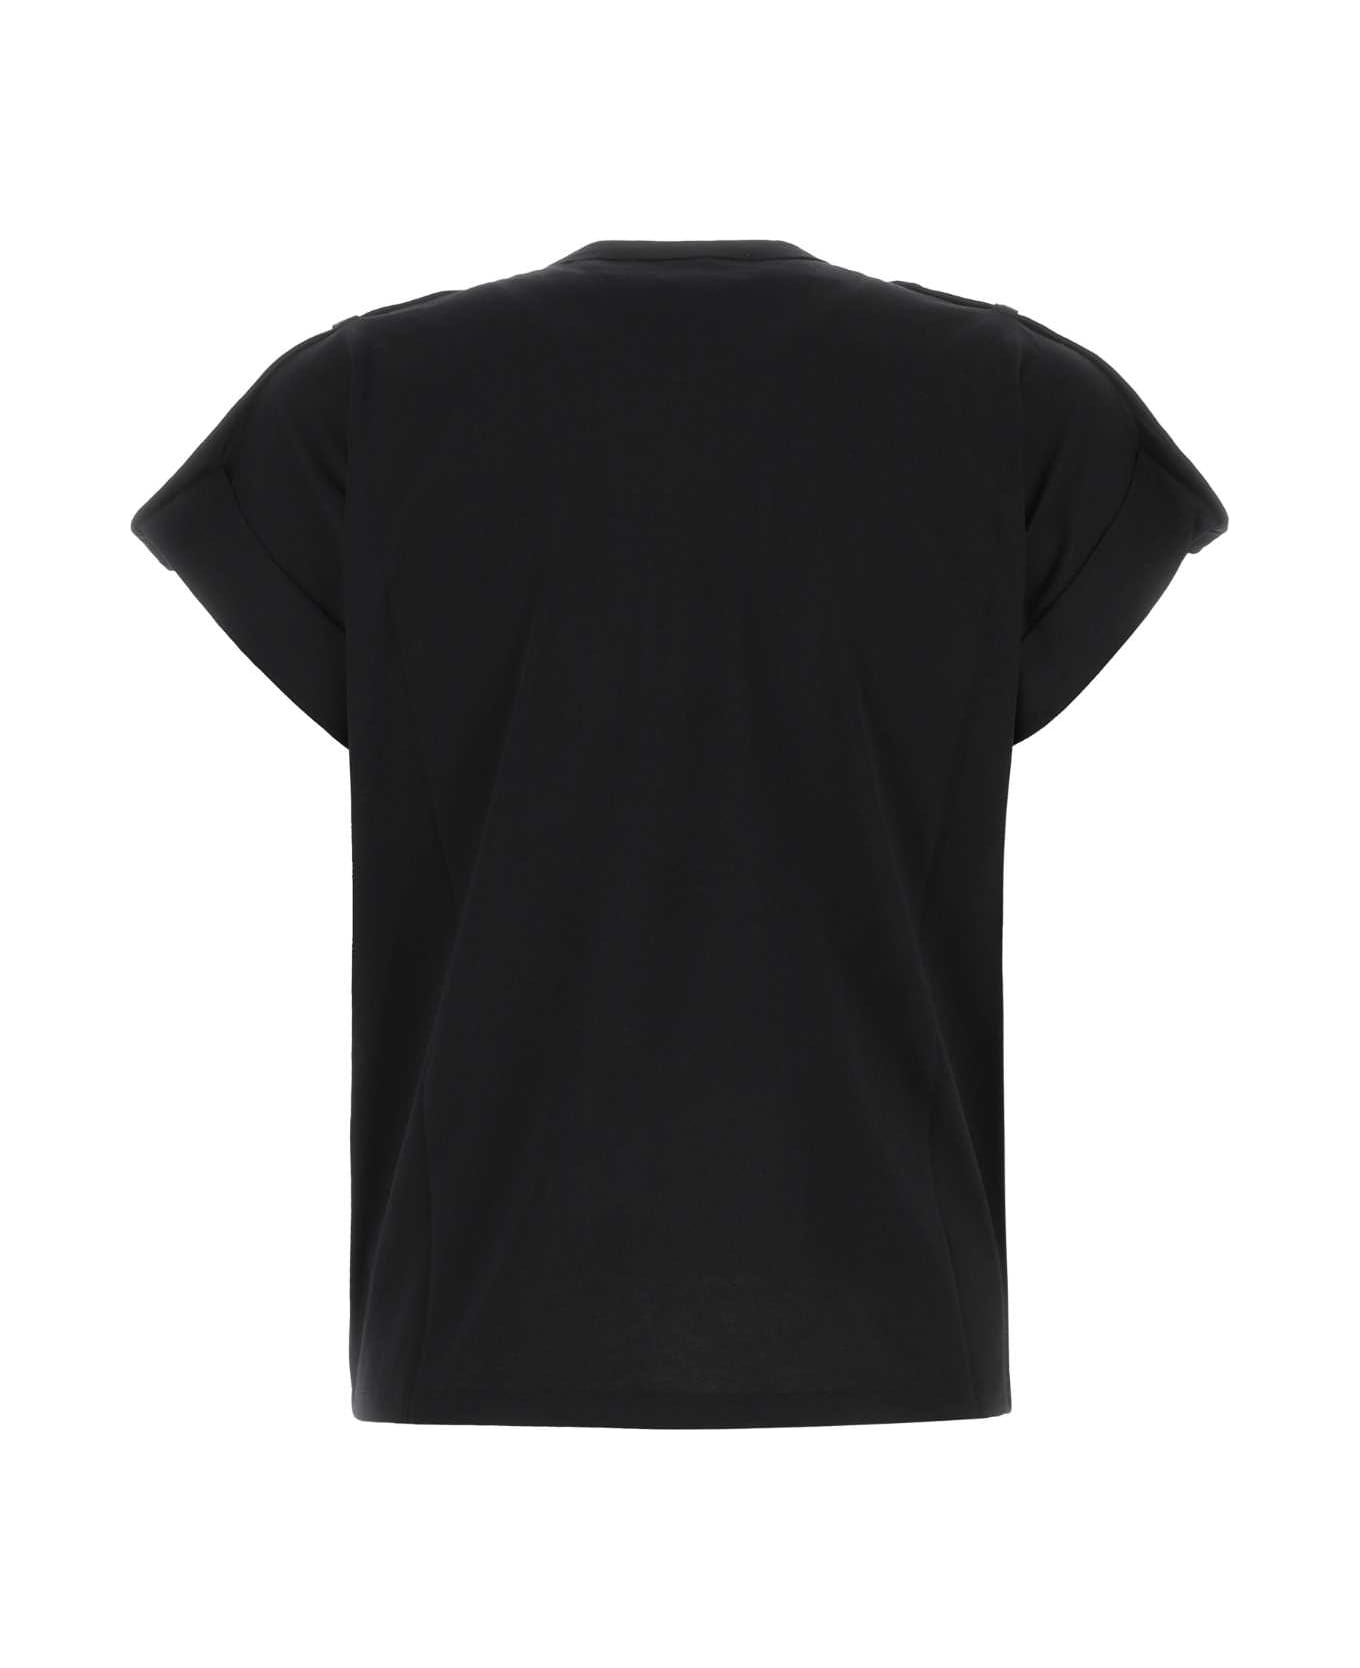 Michael Kors Black Cotton T-shirt - BLACK Tシャツ